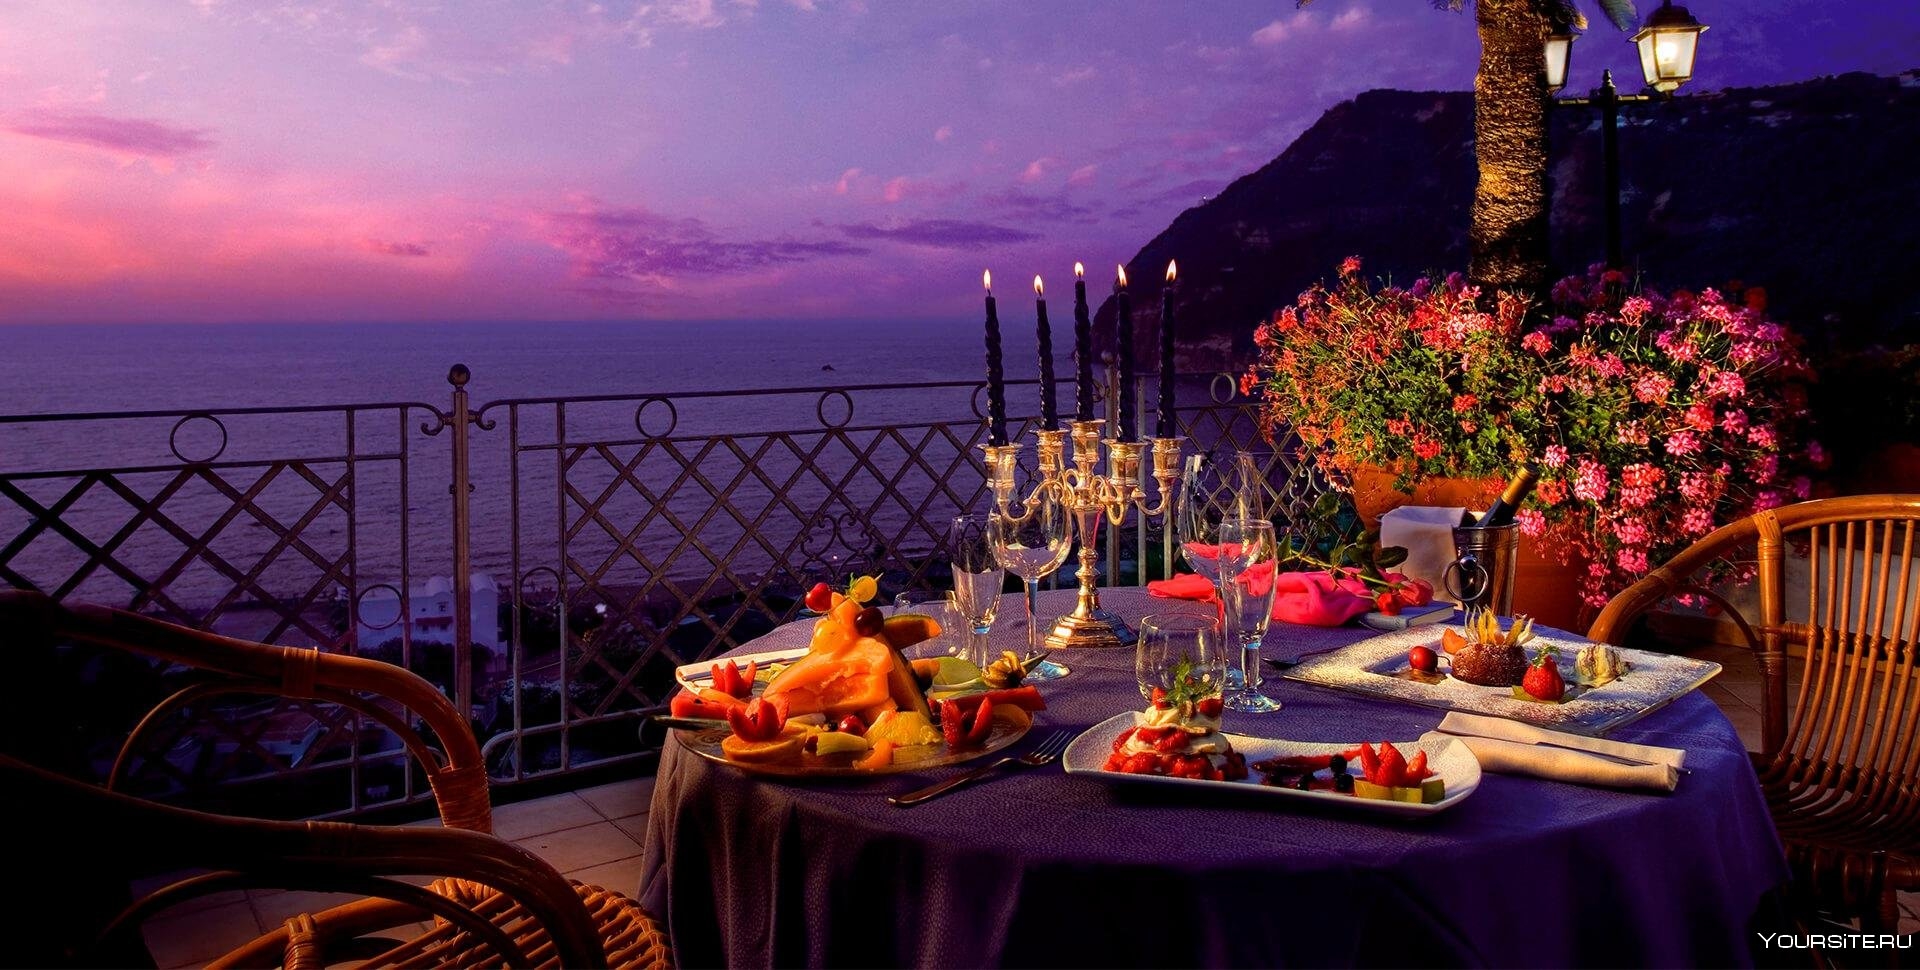 Изысканное место. Романтические места. Романтический вечер на море. Романтический ужин в красивом месте. Вечер на террасе.